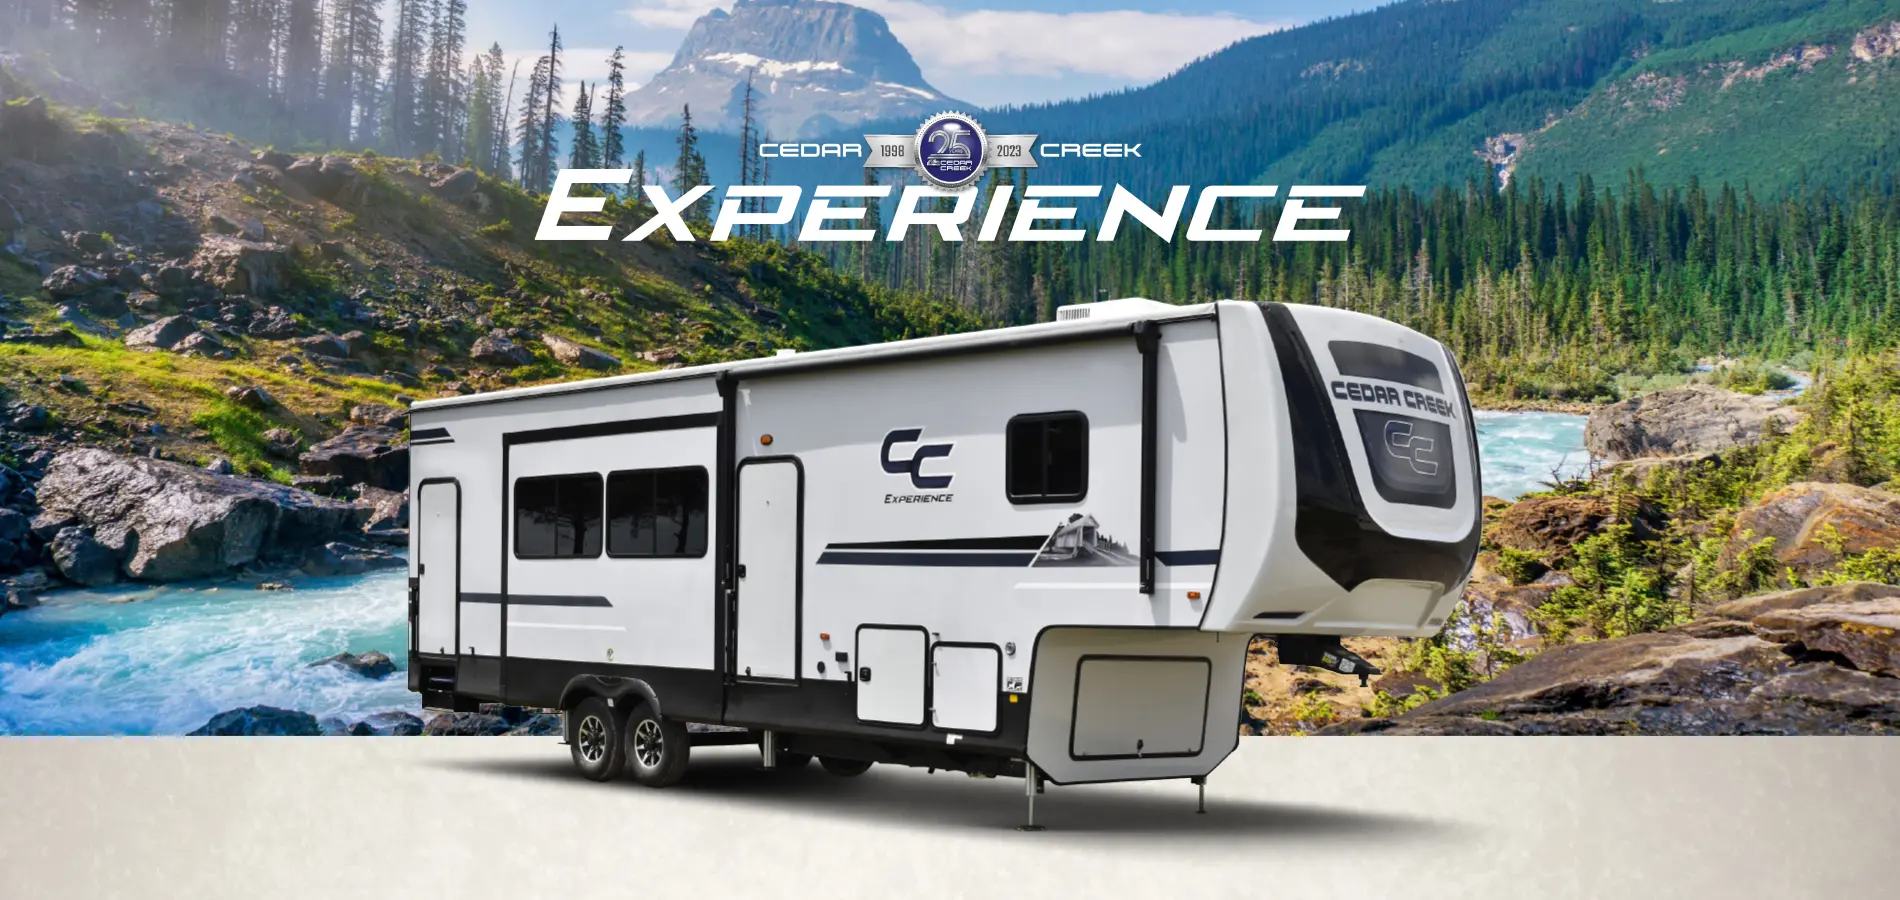 Cedar Creek Experience RVs